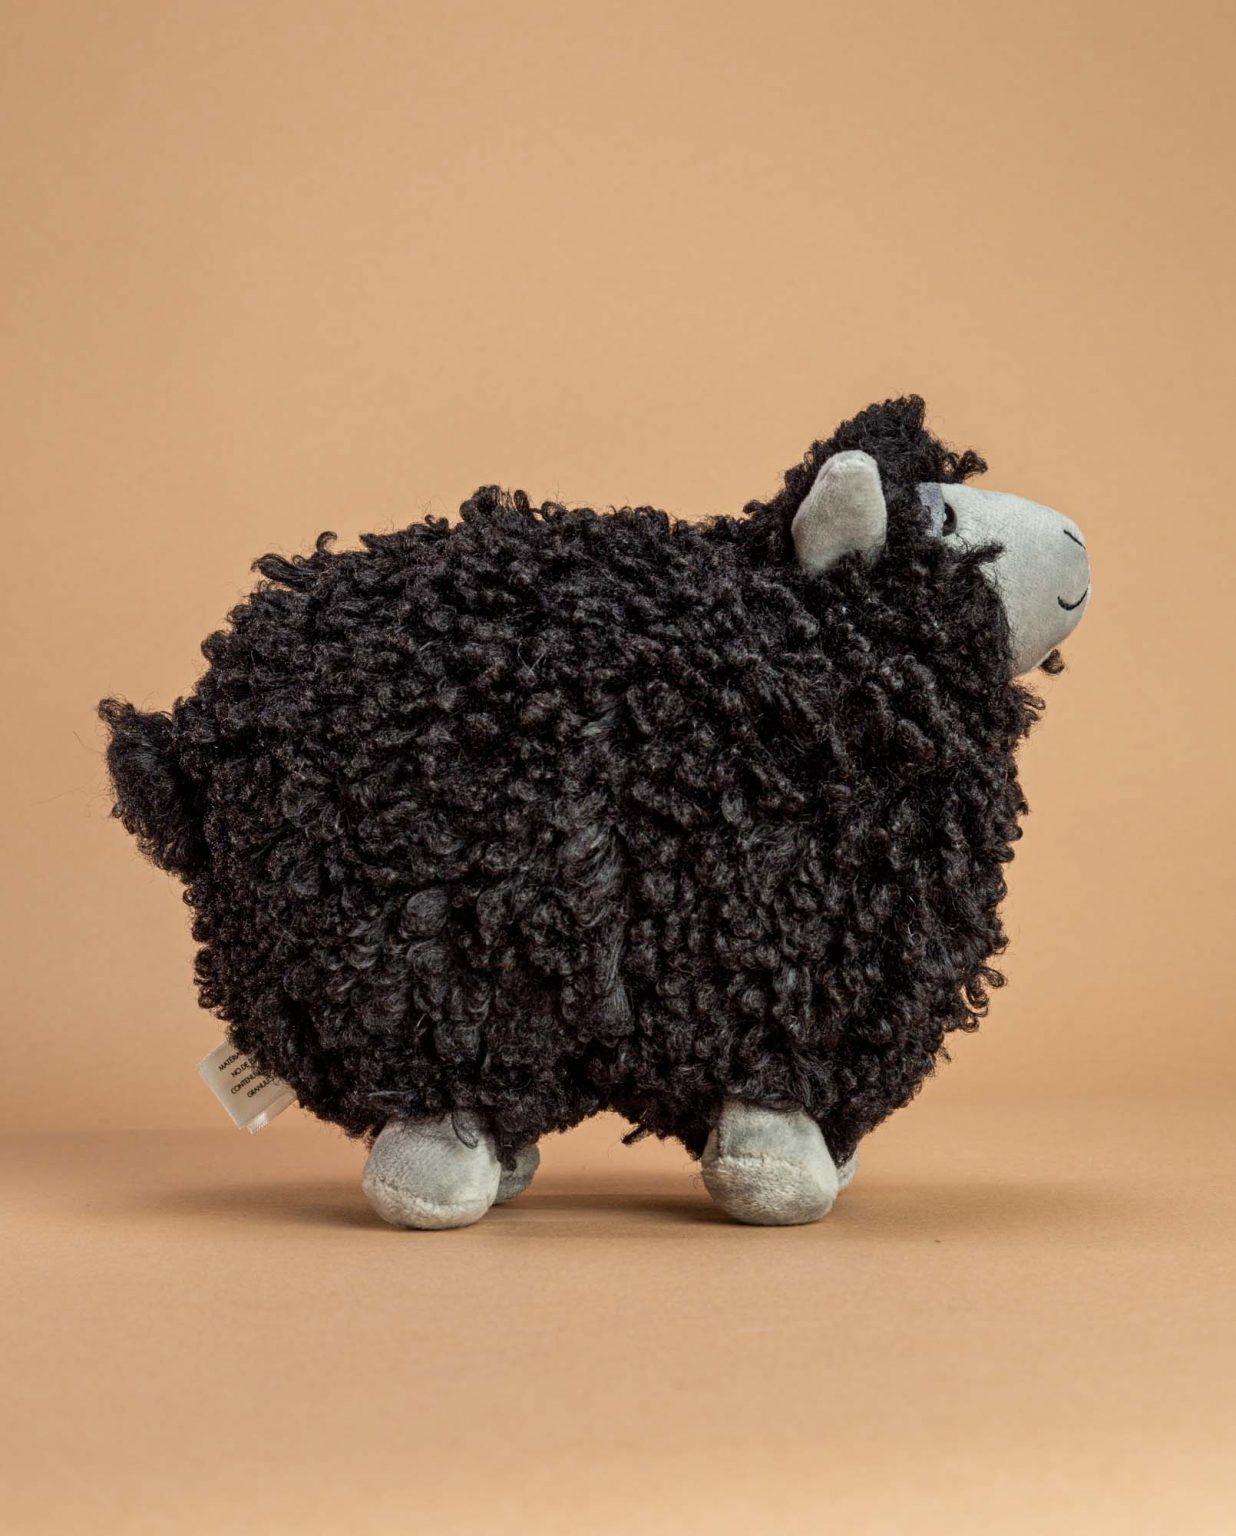 Jellycat Rolbie Black Sheep soft toy gift - Send a Cuddly